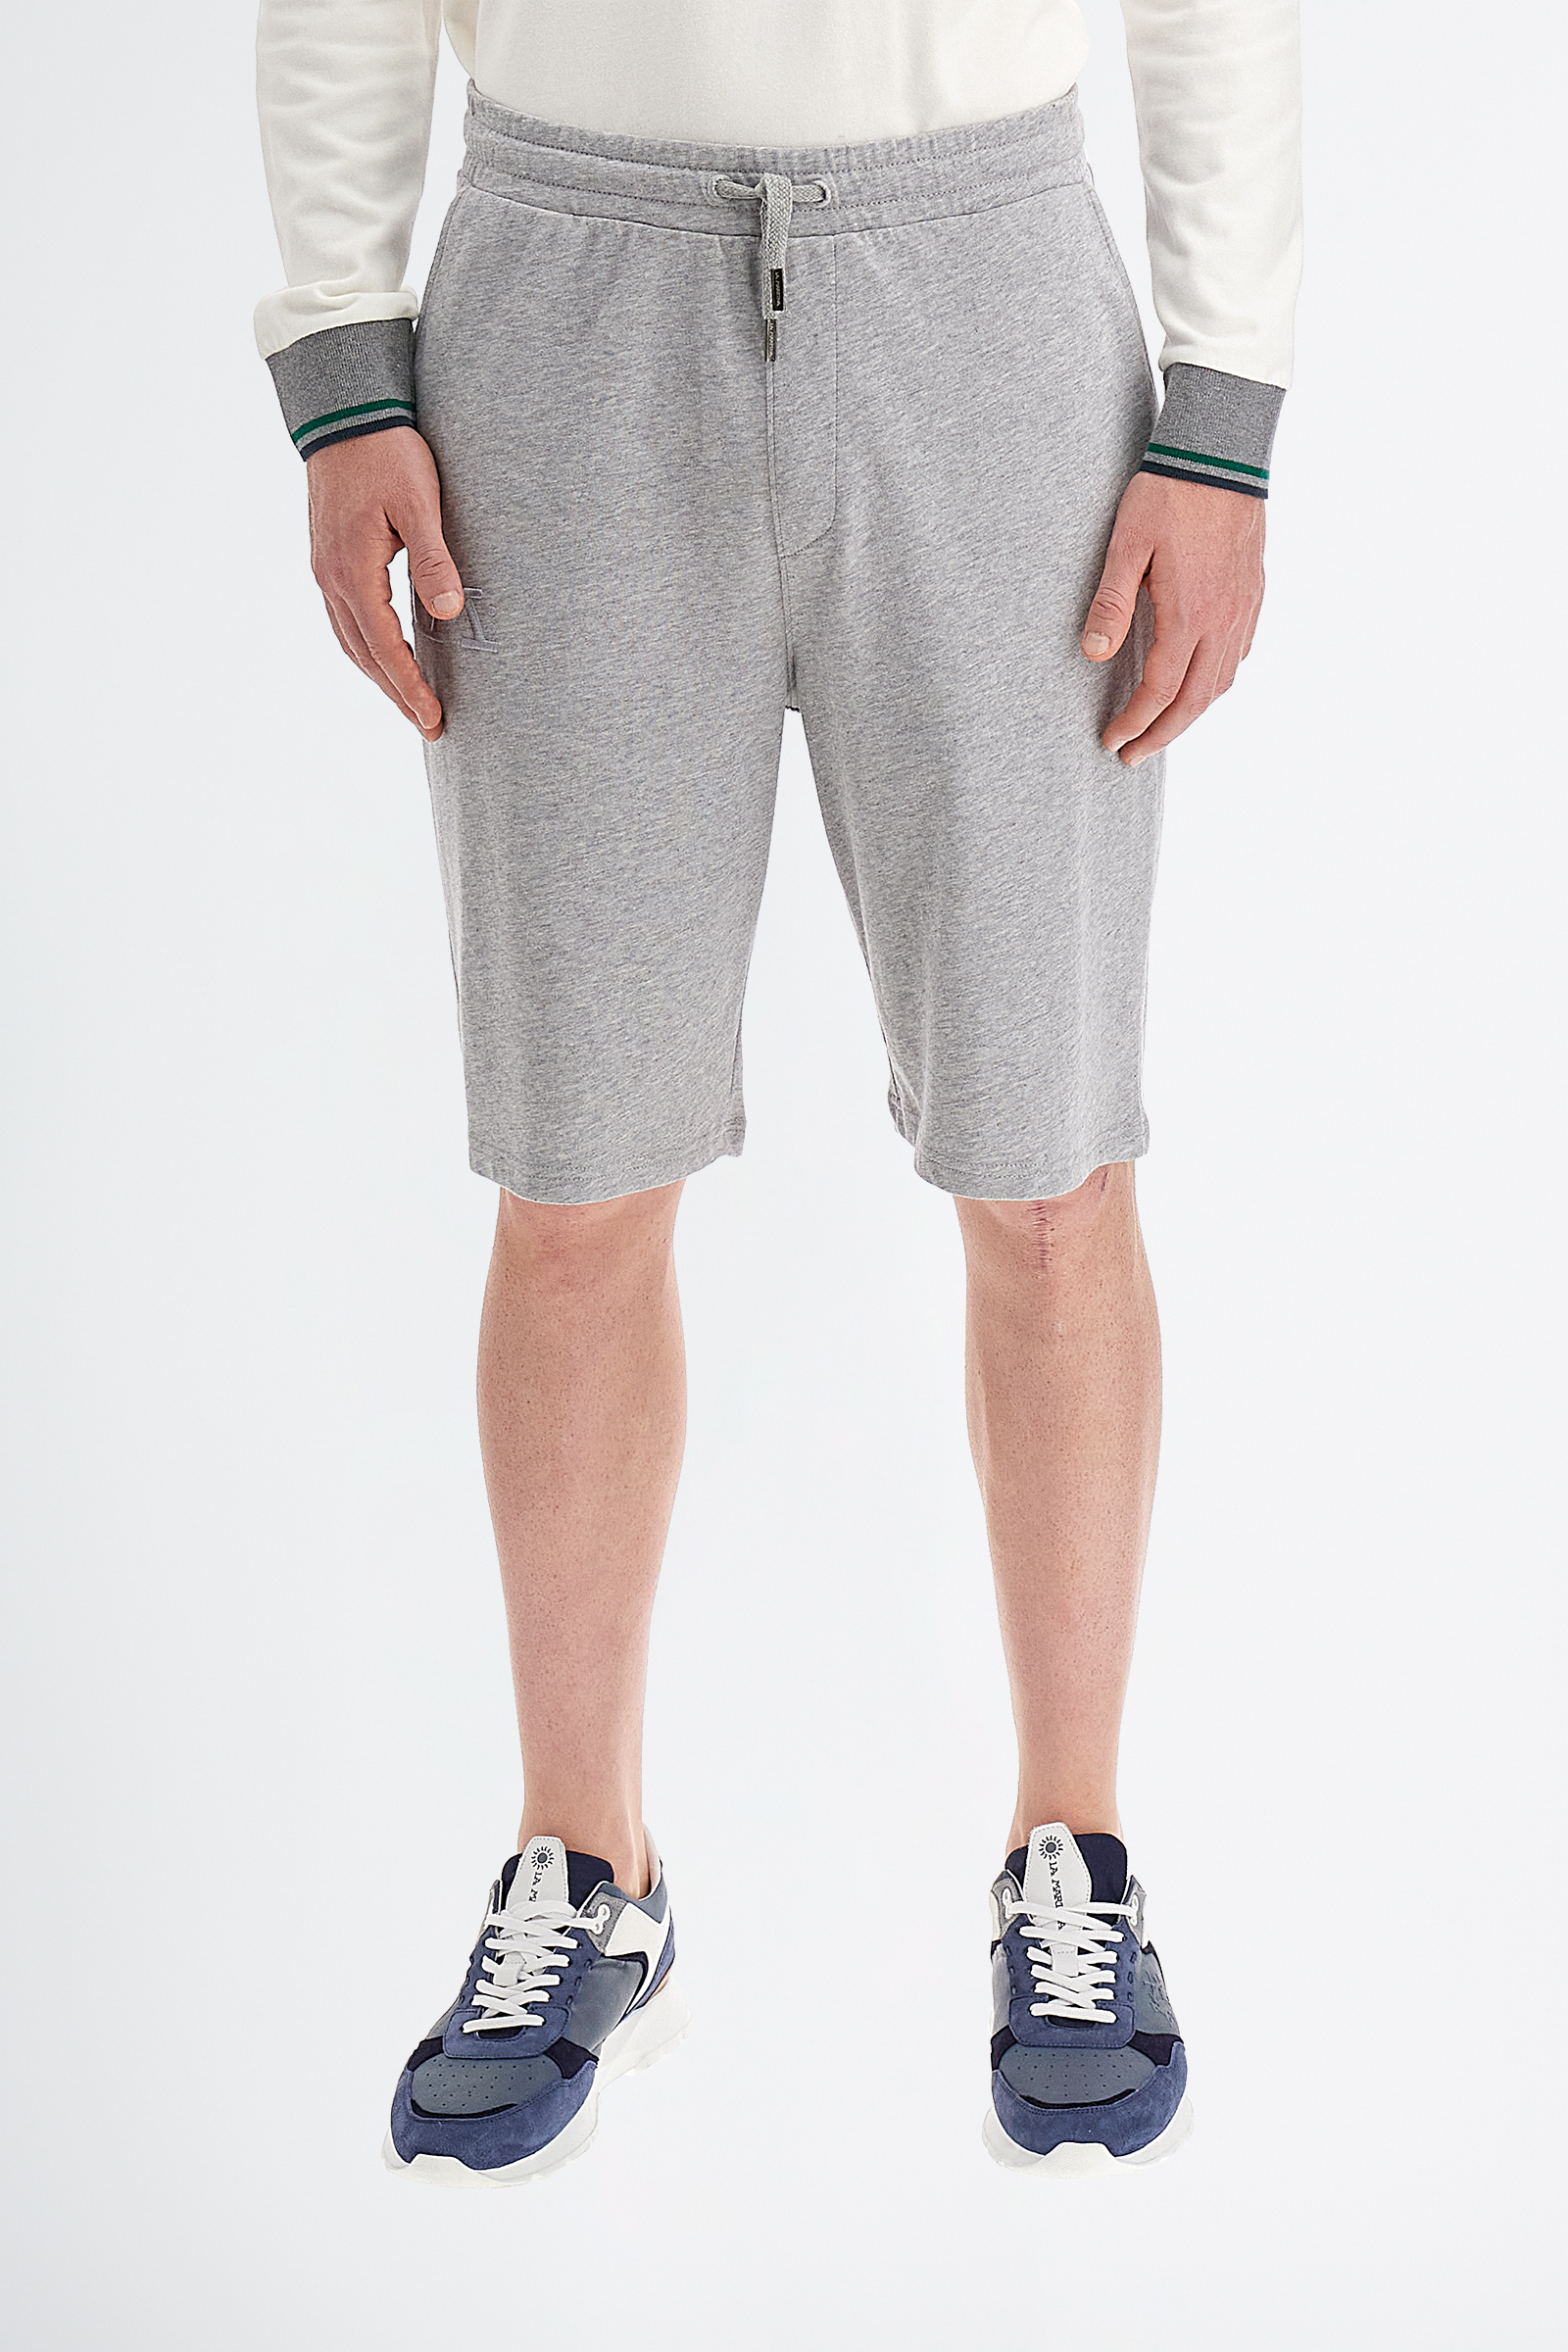 Men's knee-length Bermuda shorts in stretch cotton